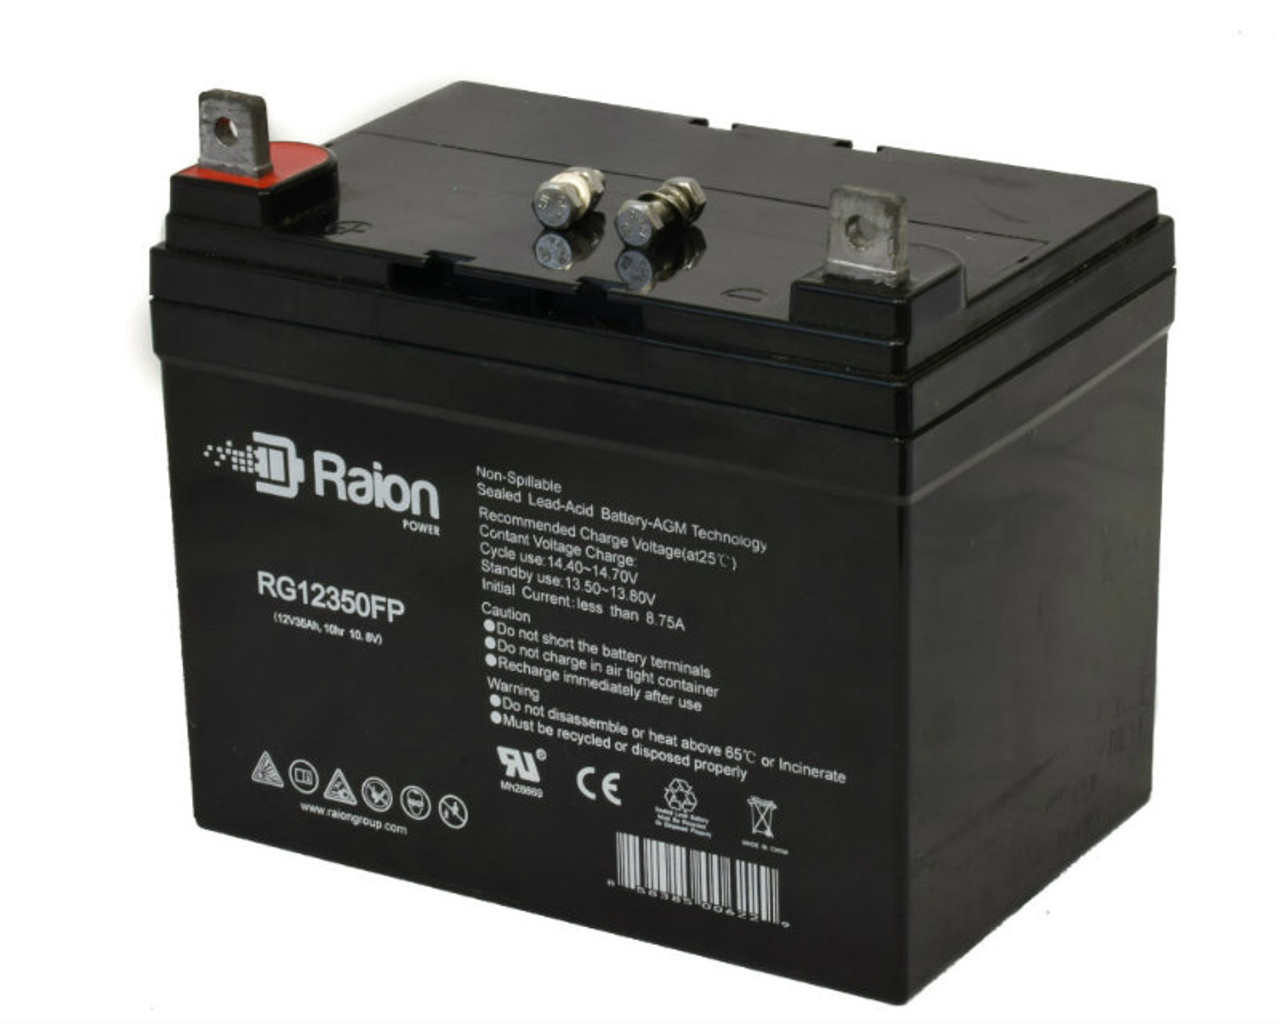 Raion Power 12V 35Ah Replacement UPS Battery Cartridge for Topaz 450BA